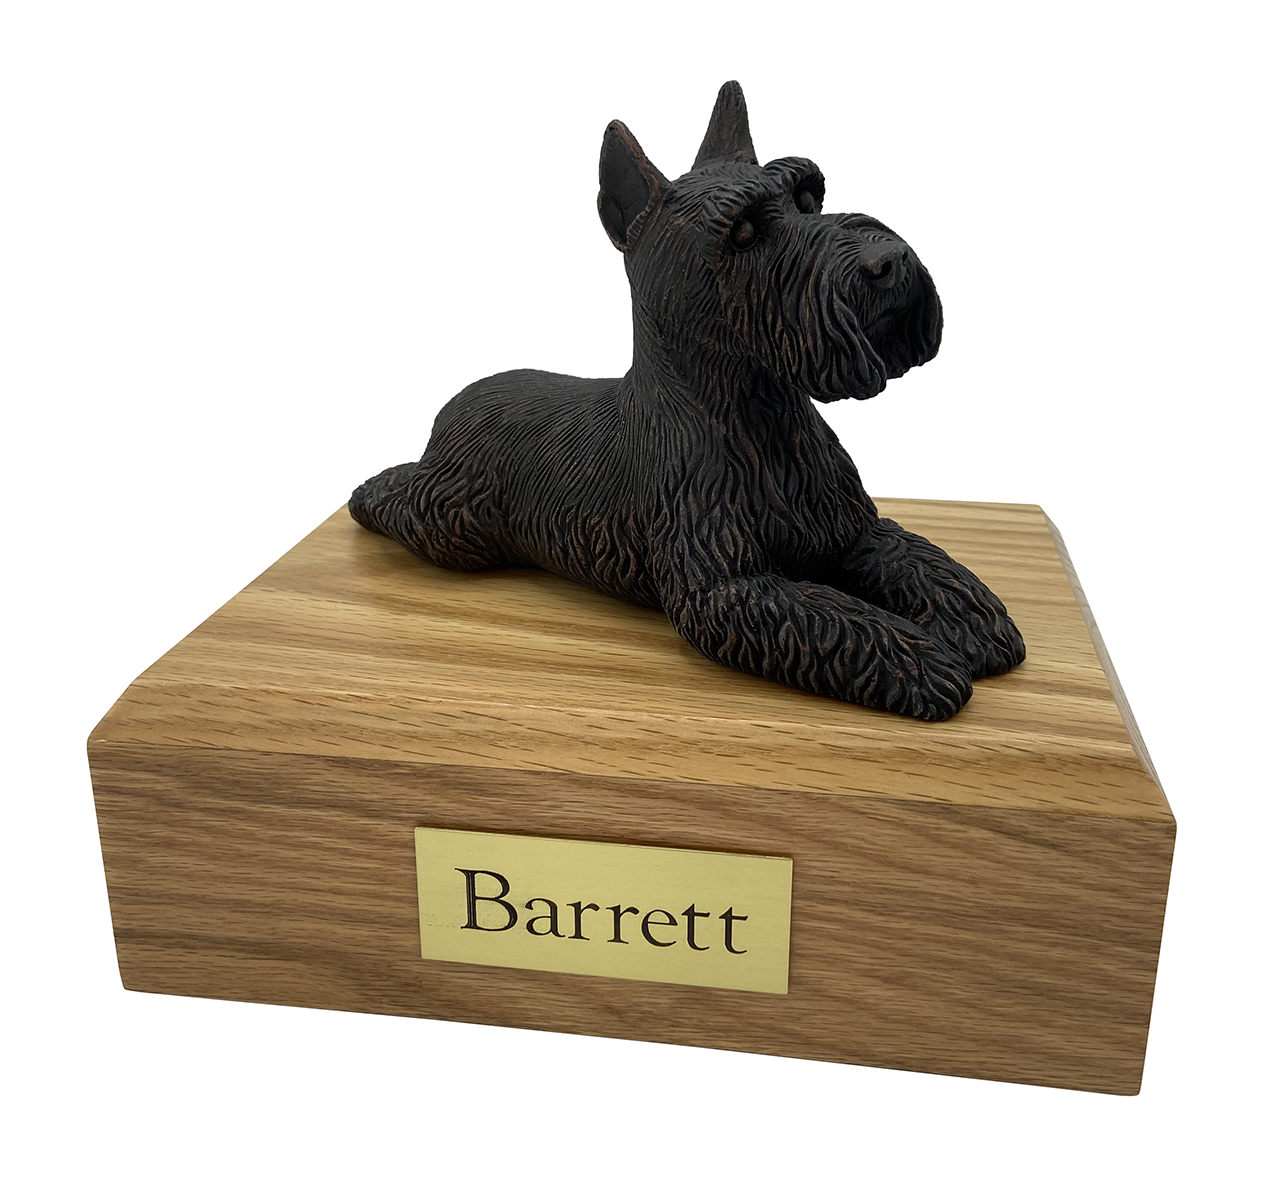 Dog, Schnauzer, Bronze (Ears Up) - Figurine Urn